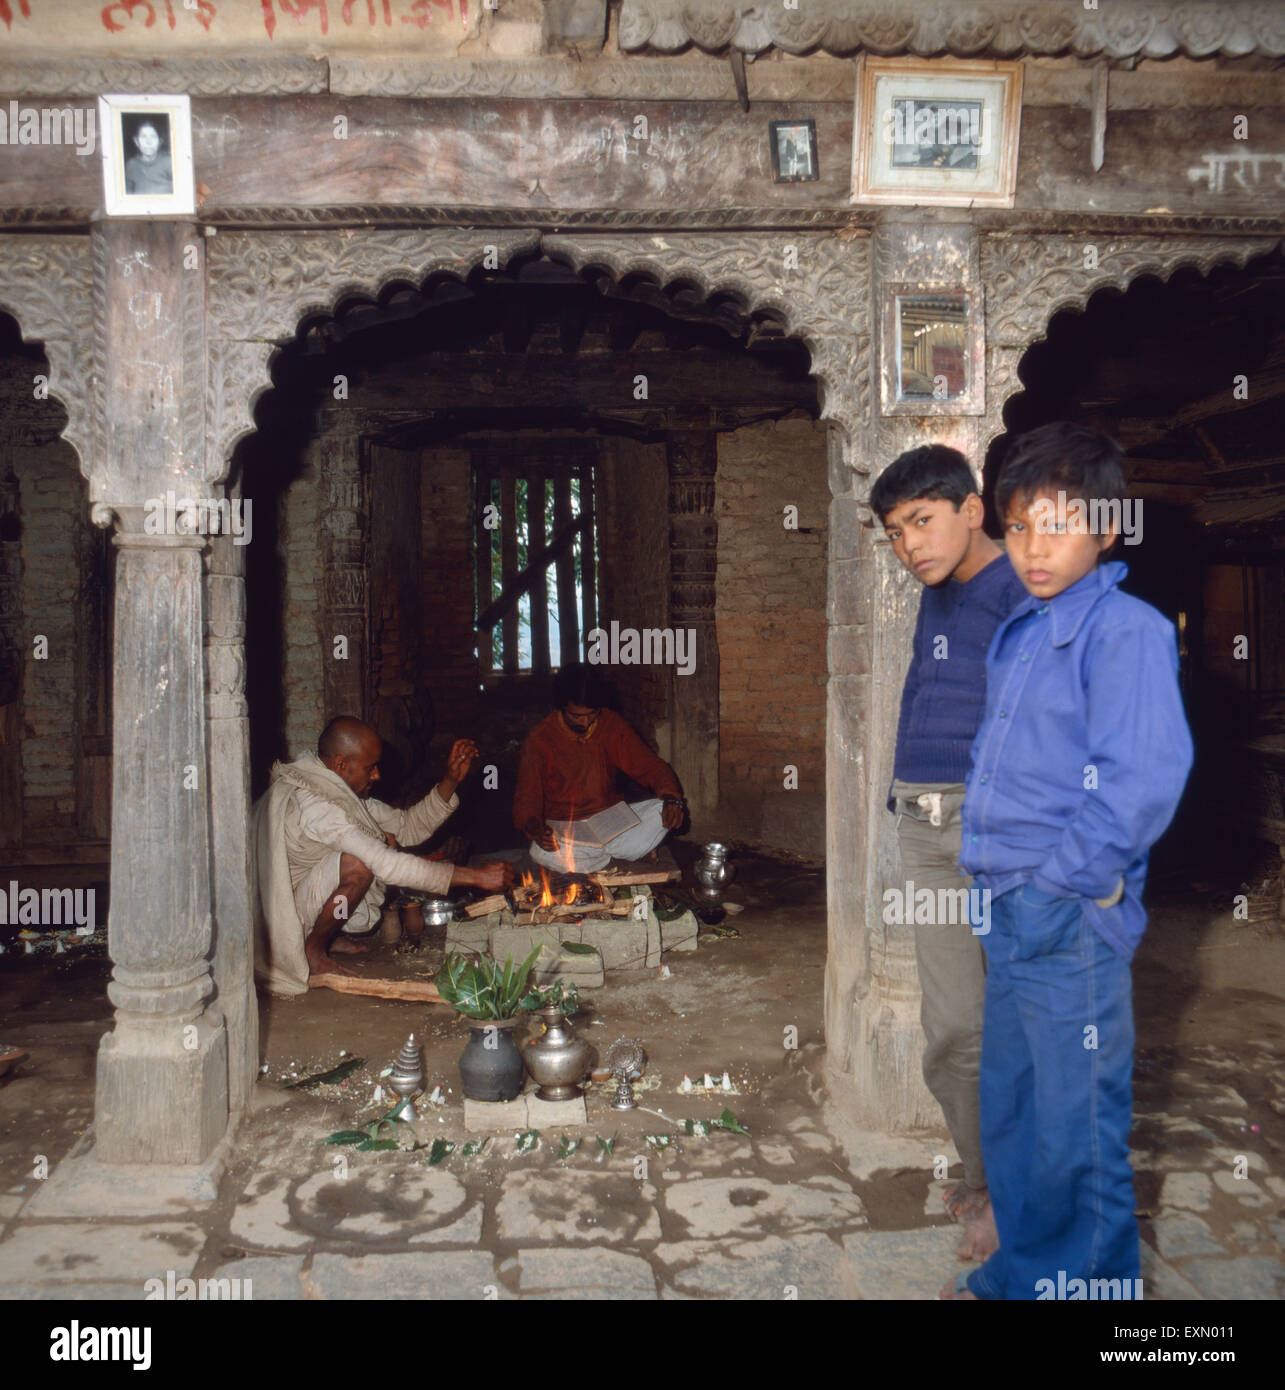 Rituelle Opfergaben im Vishnu-Tempel Changu Narayan bei Bhaktapur, Nepal 1970er Jahre. Ritual offerings in Vishnu temple Changu Narayan near Bhaktapur, Nepal 1970s. Stock Photo